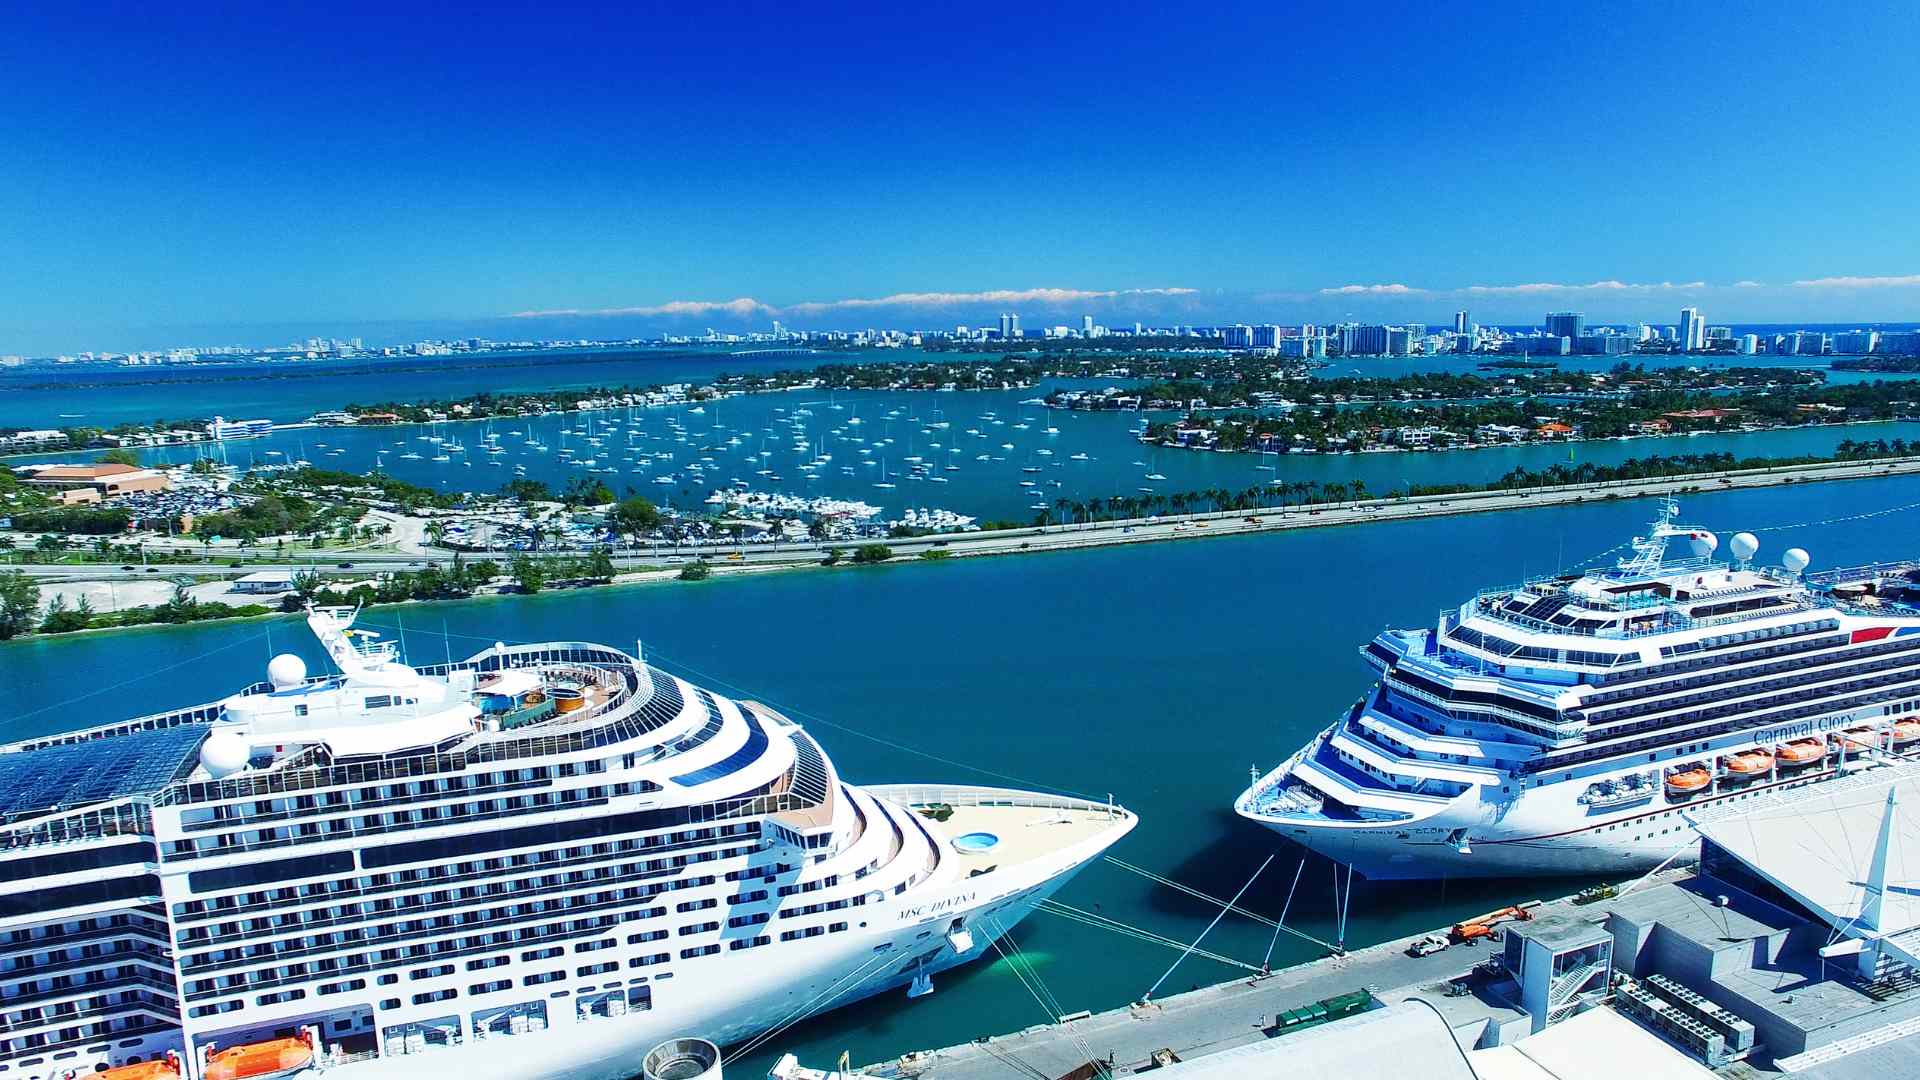 Bermuda Cruise from Florida